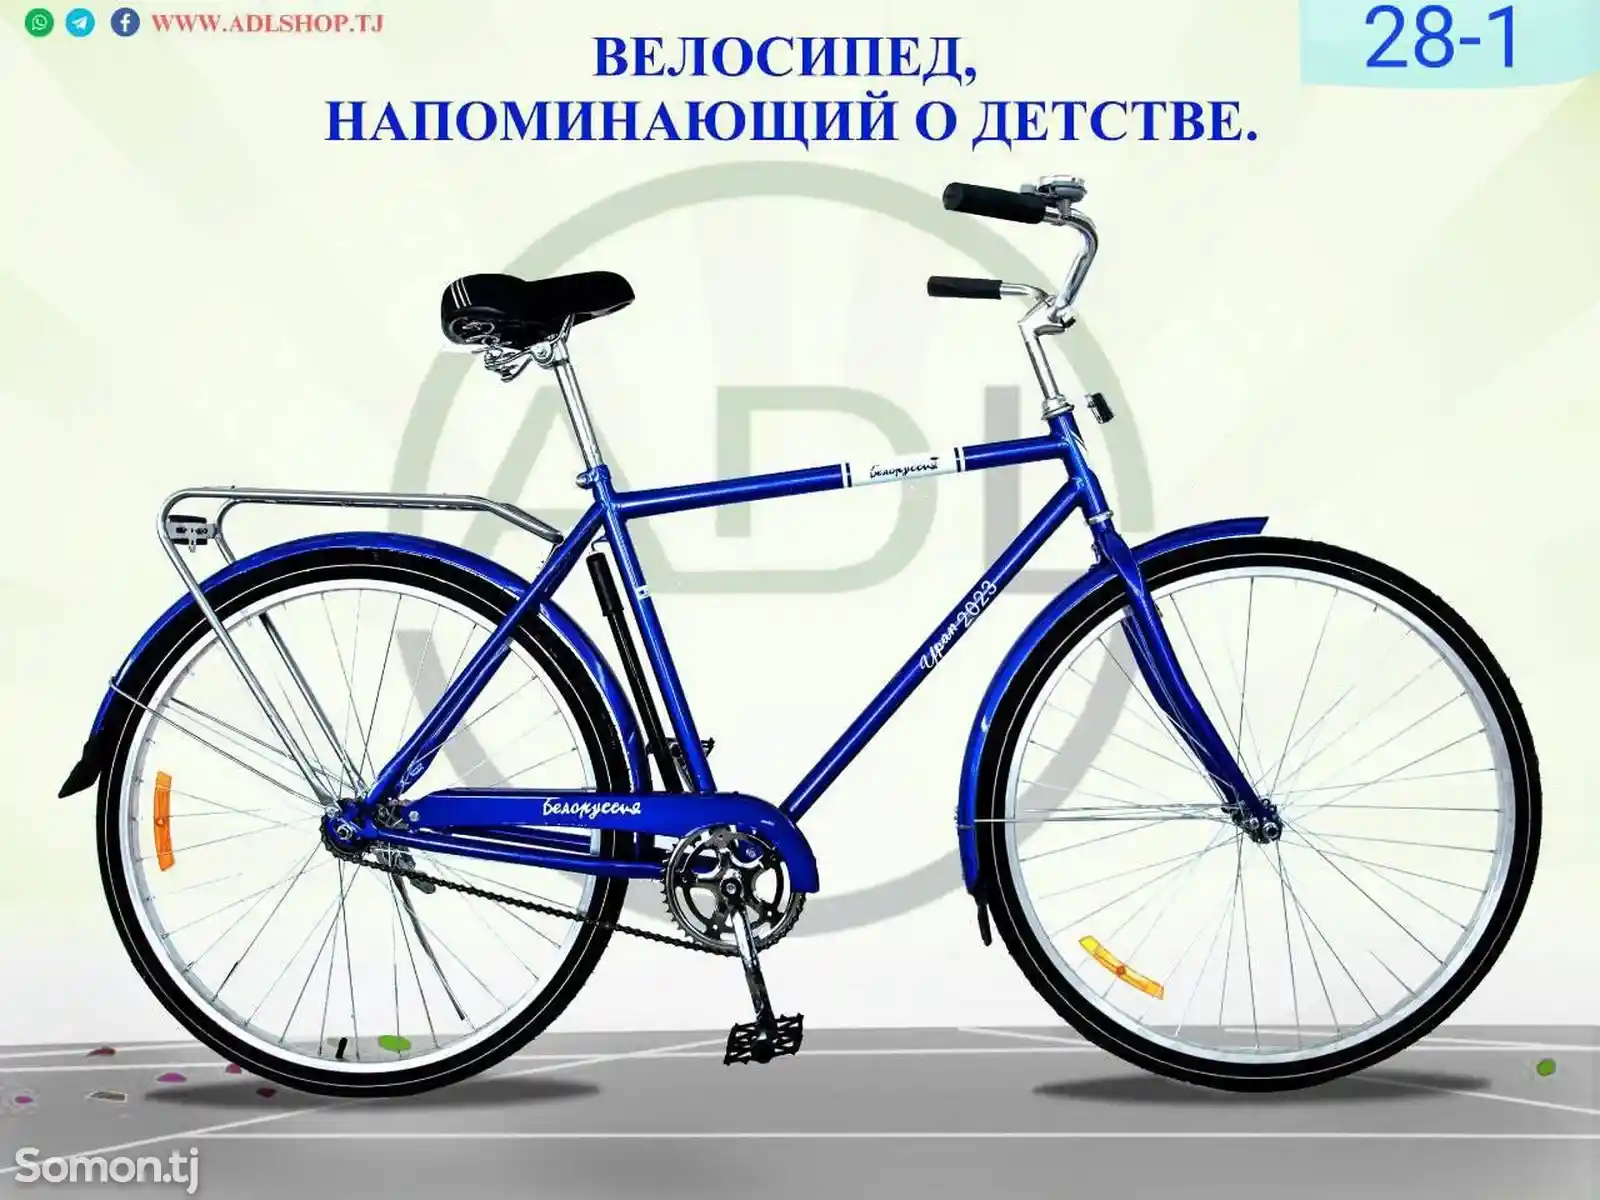 Велосипед R28-1